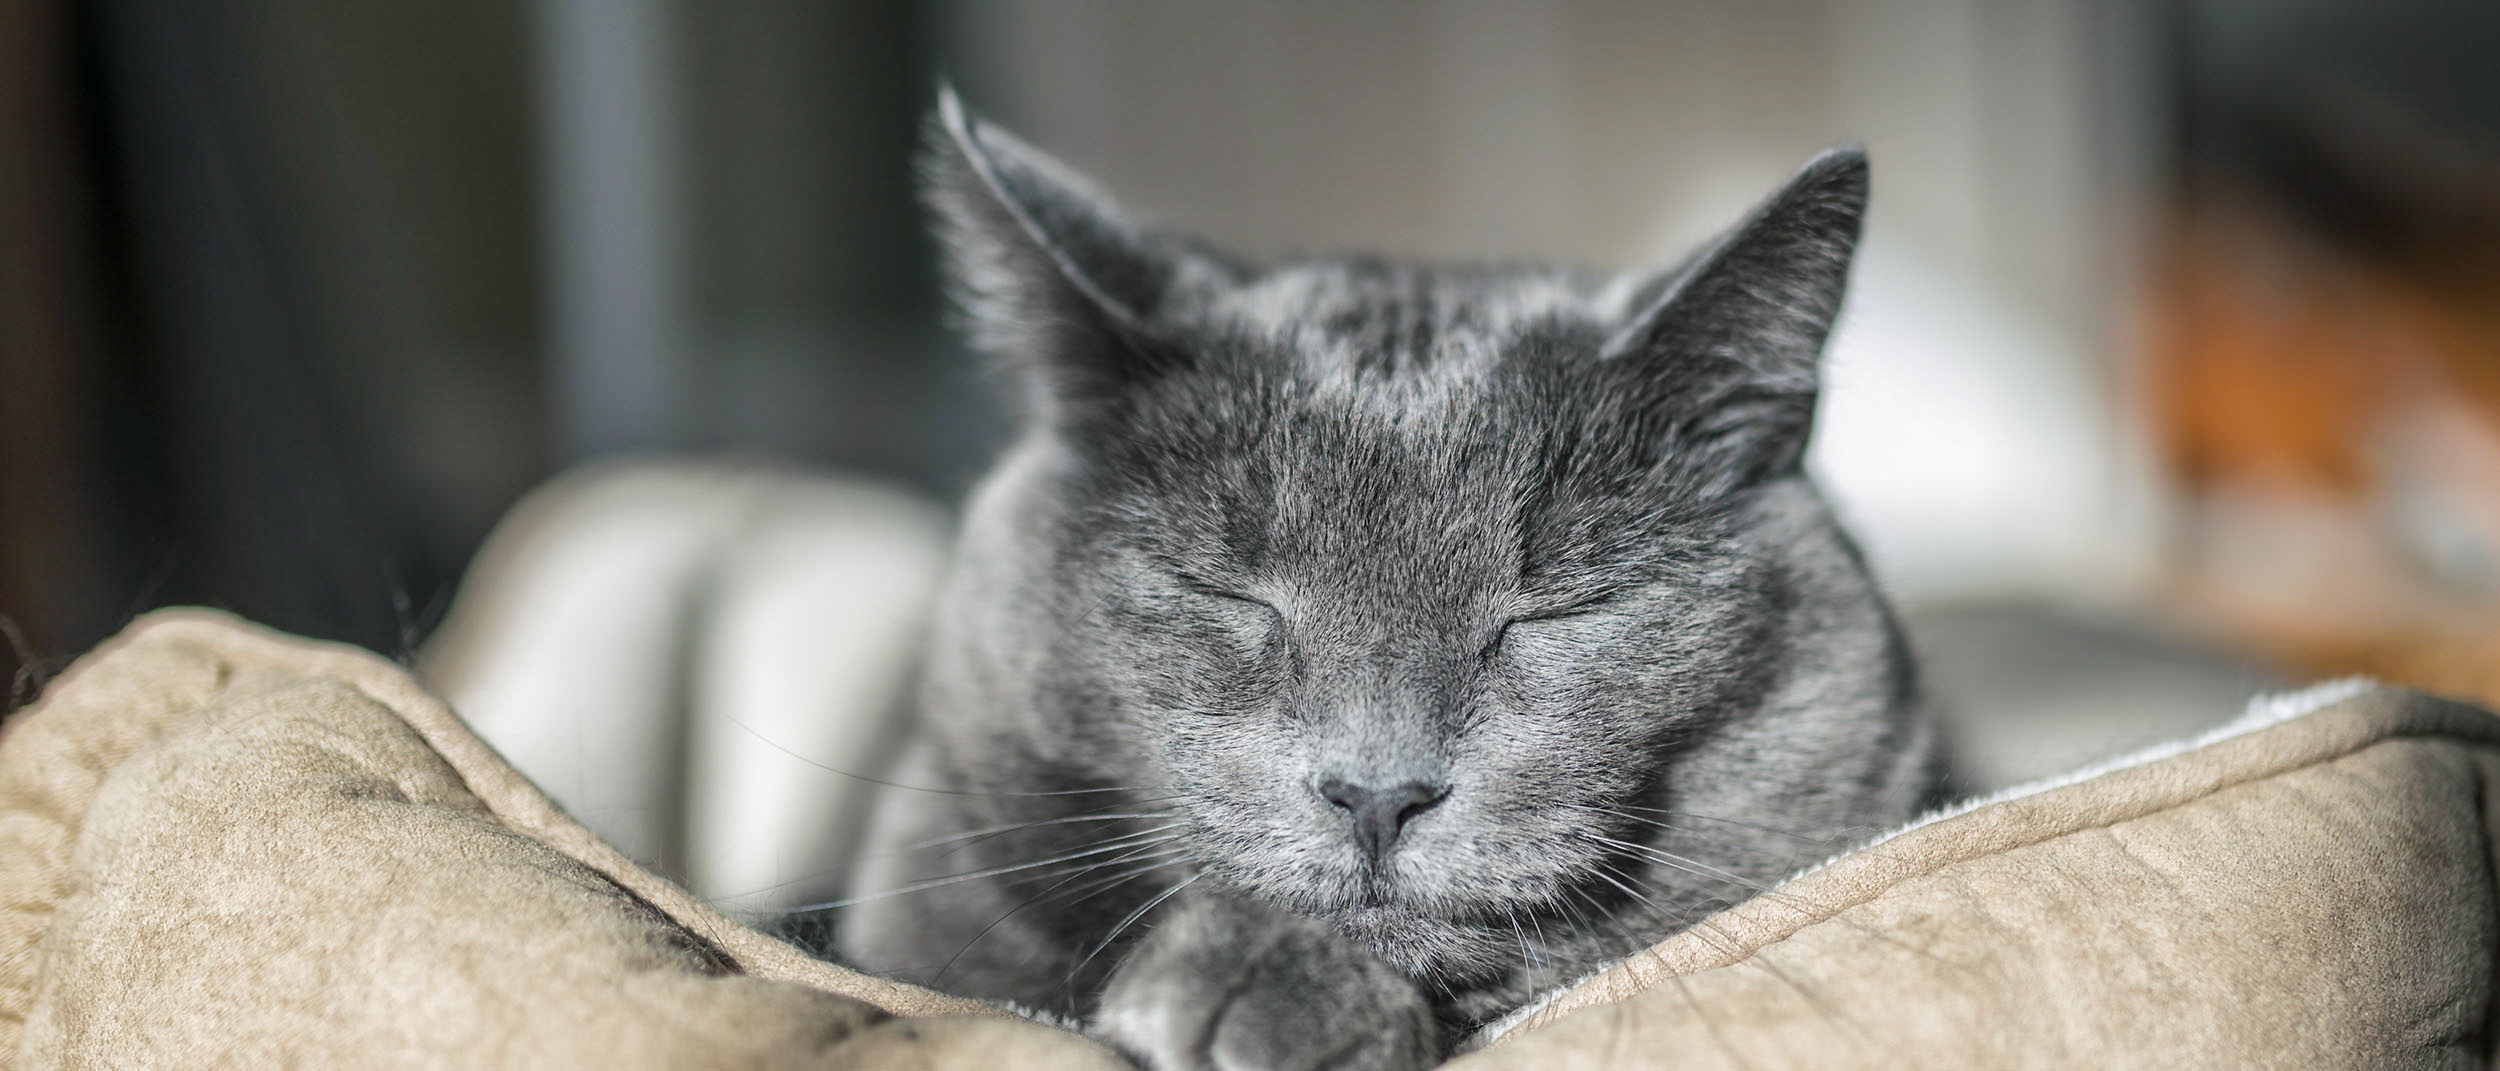 Aging cat lying down asleep on a cushion.